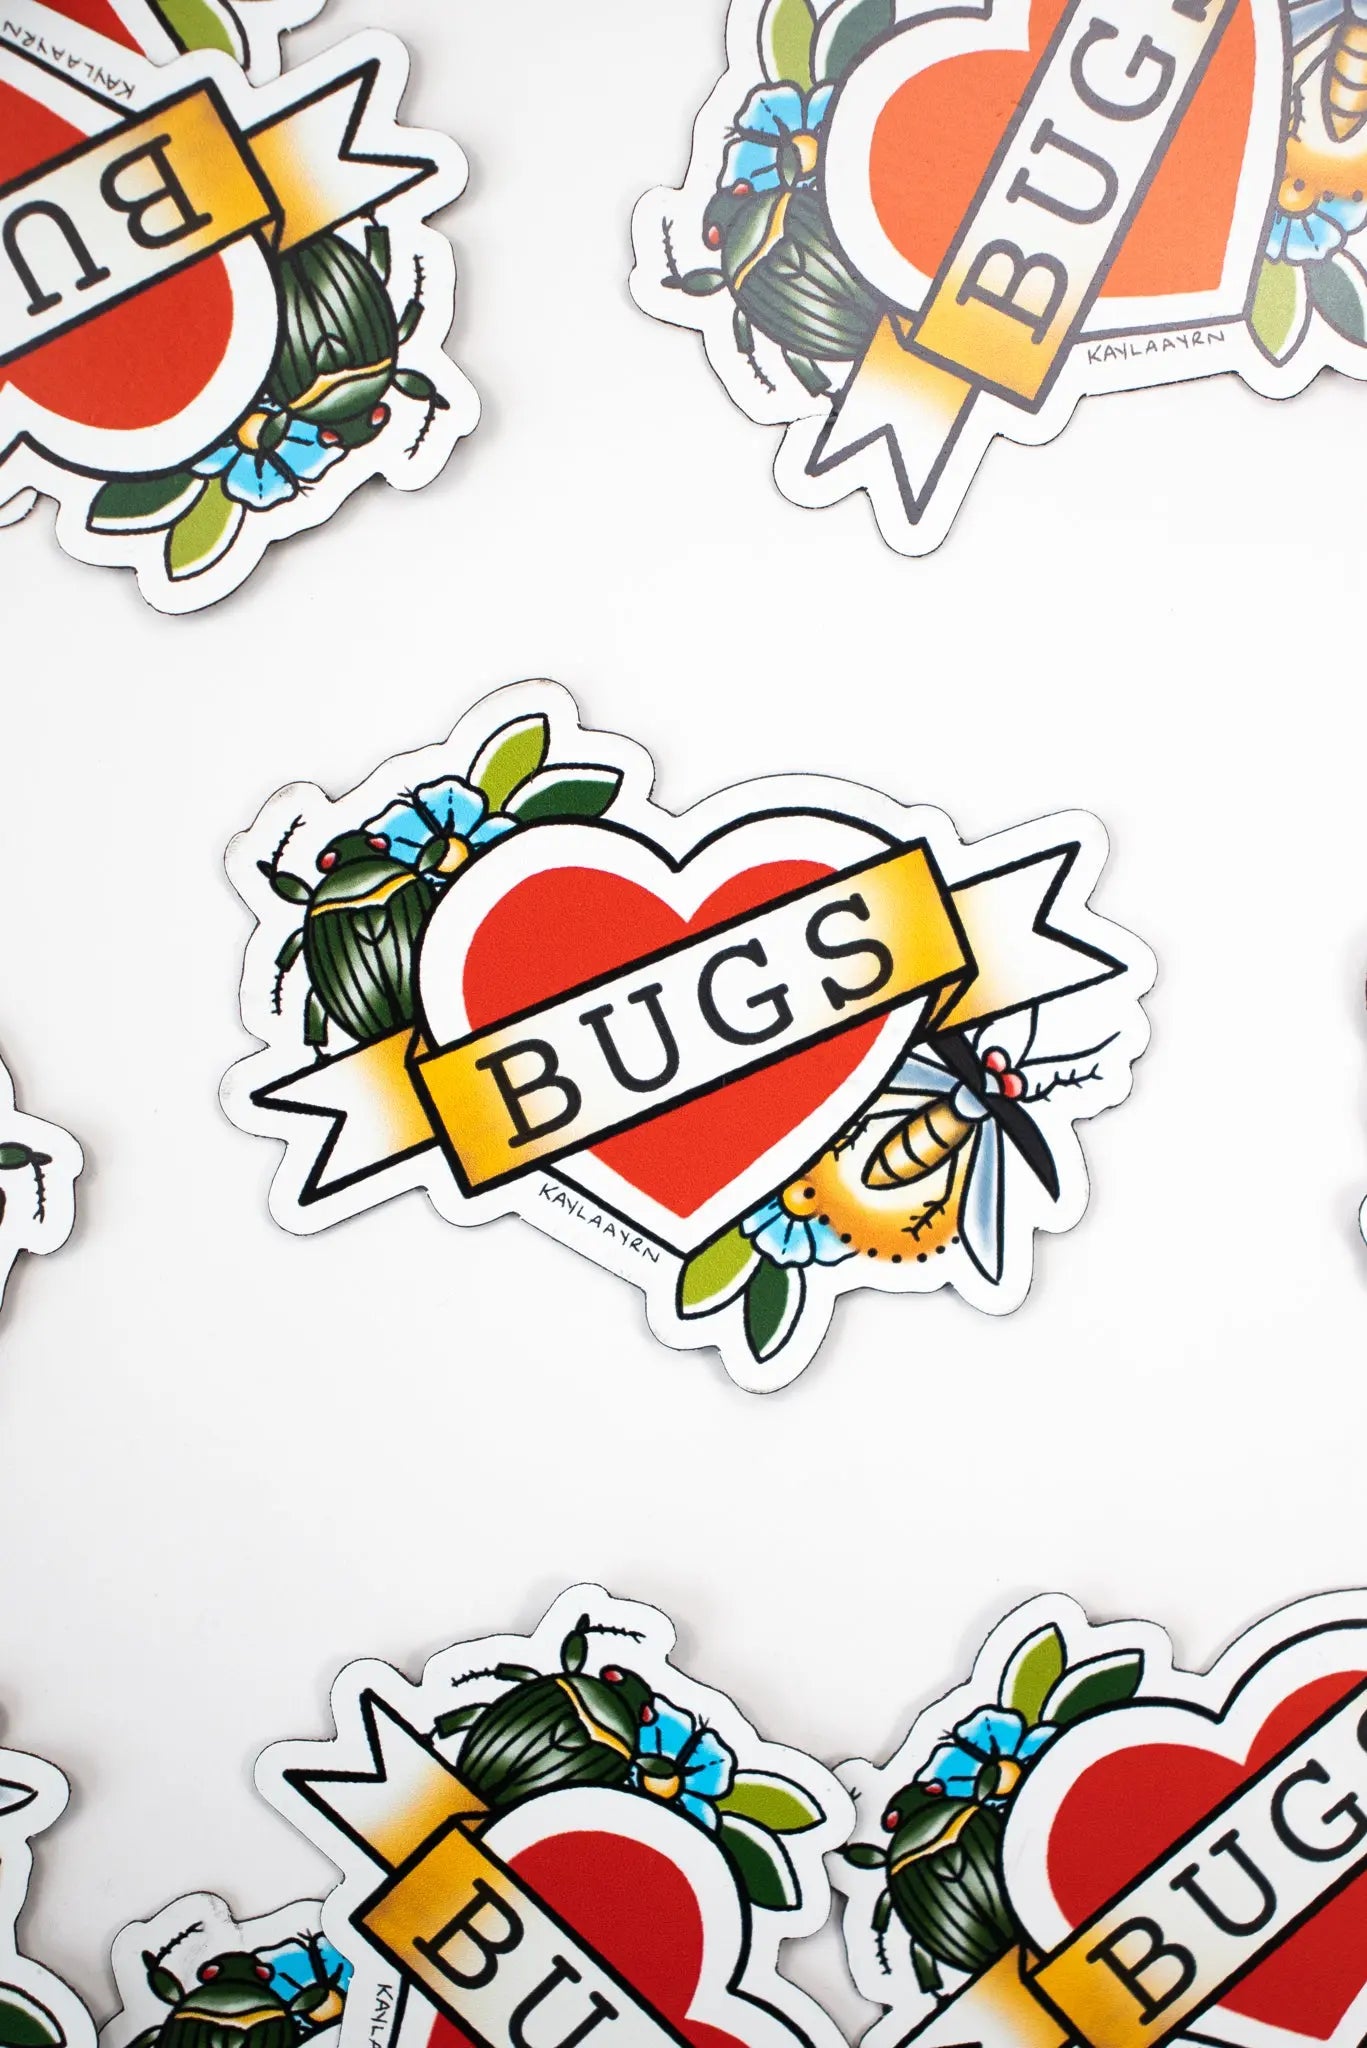 Bugs traditional tattoo design sticker